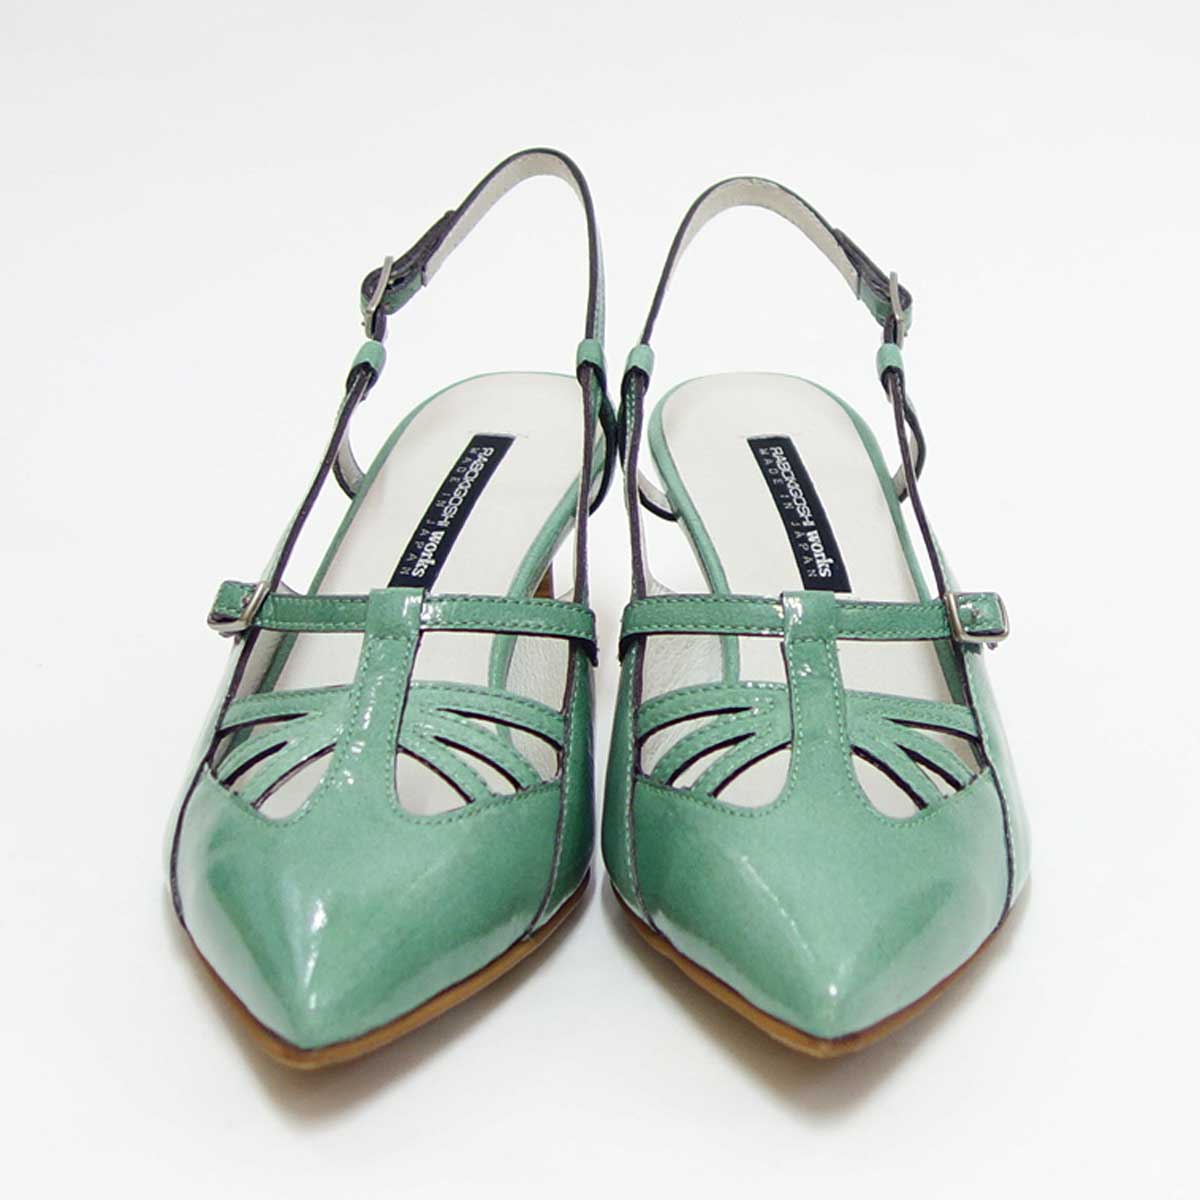 【SALE 50%OFF】 RABOKIGOSHI works（ラボキゴシ ワークス） 12316 ライトグリーン エナメルバックベルトパンプス 「靴」